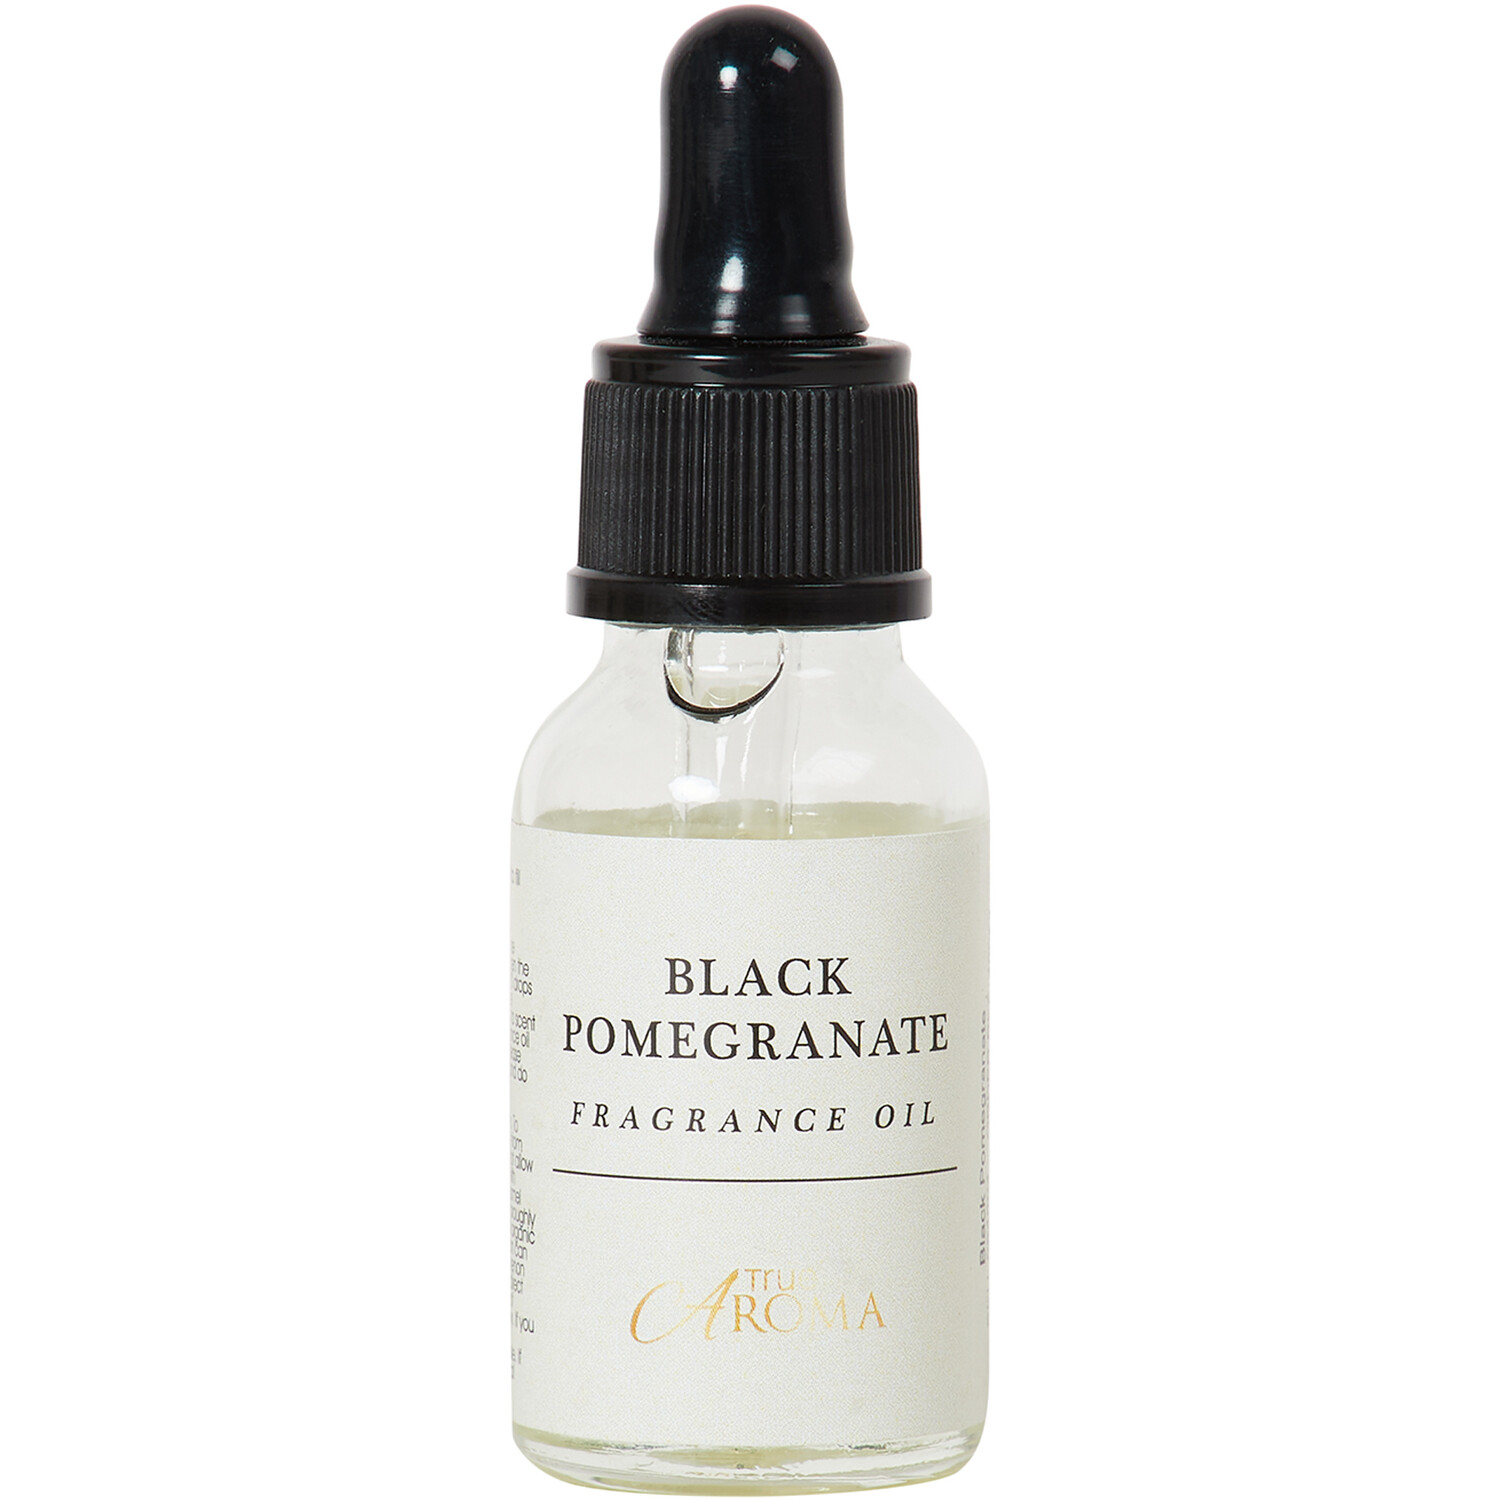 Black Pomegranate Fragranced Oil Image 1